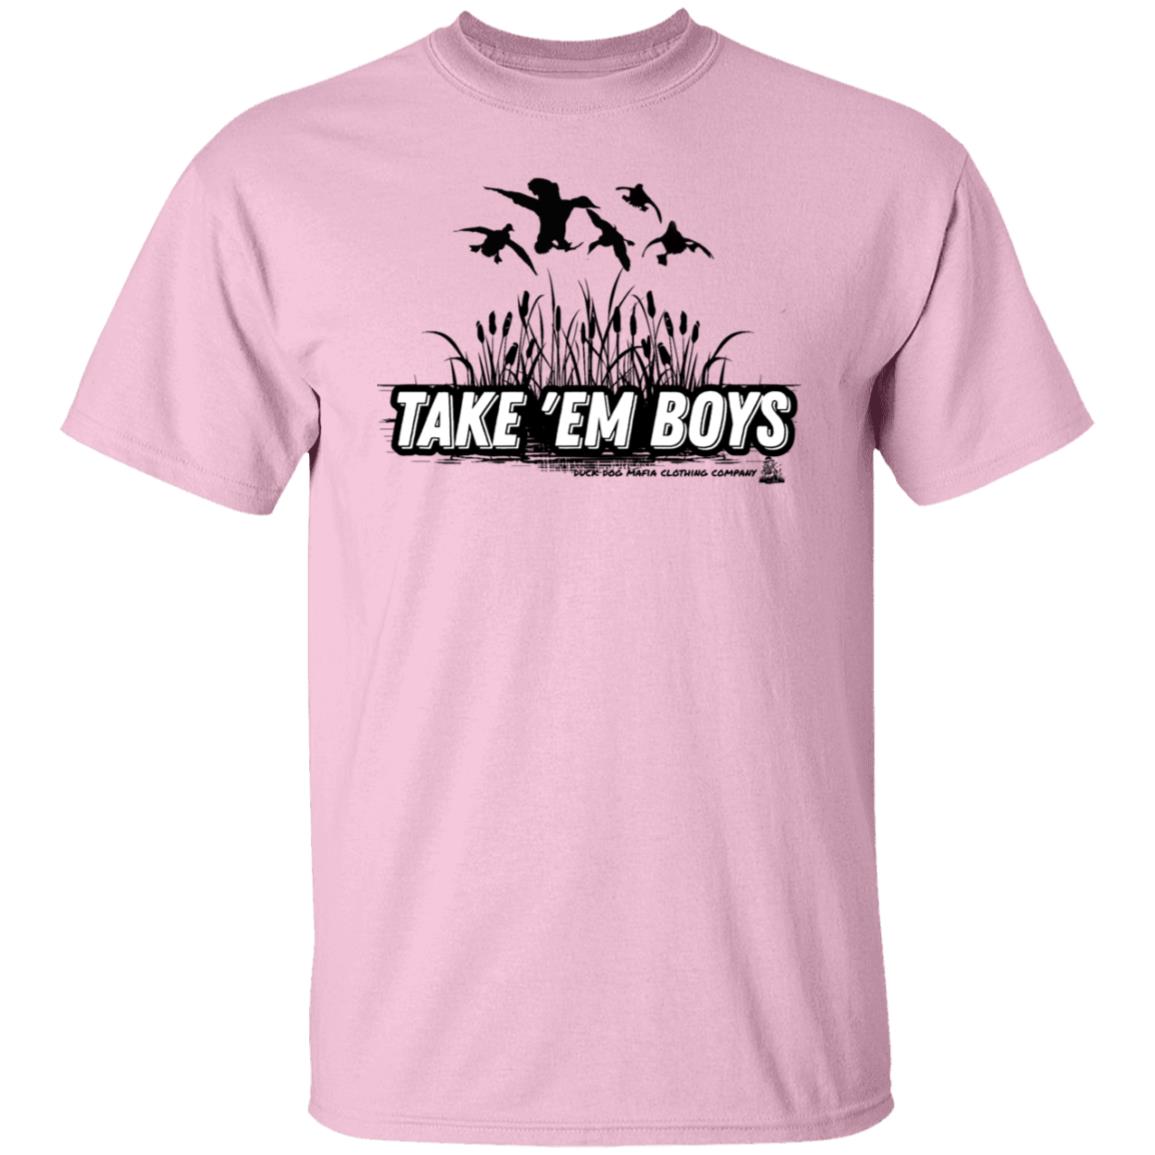 TAKE 'EM BOYS T-SHIRTS